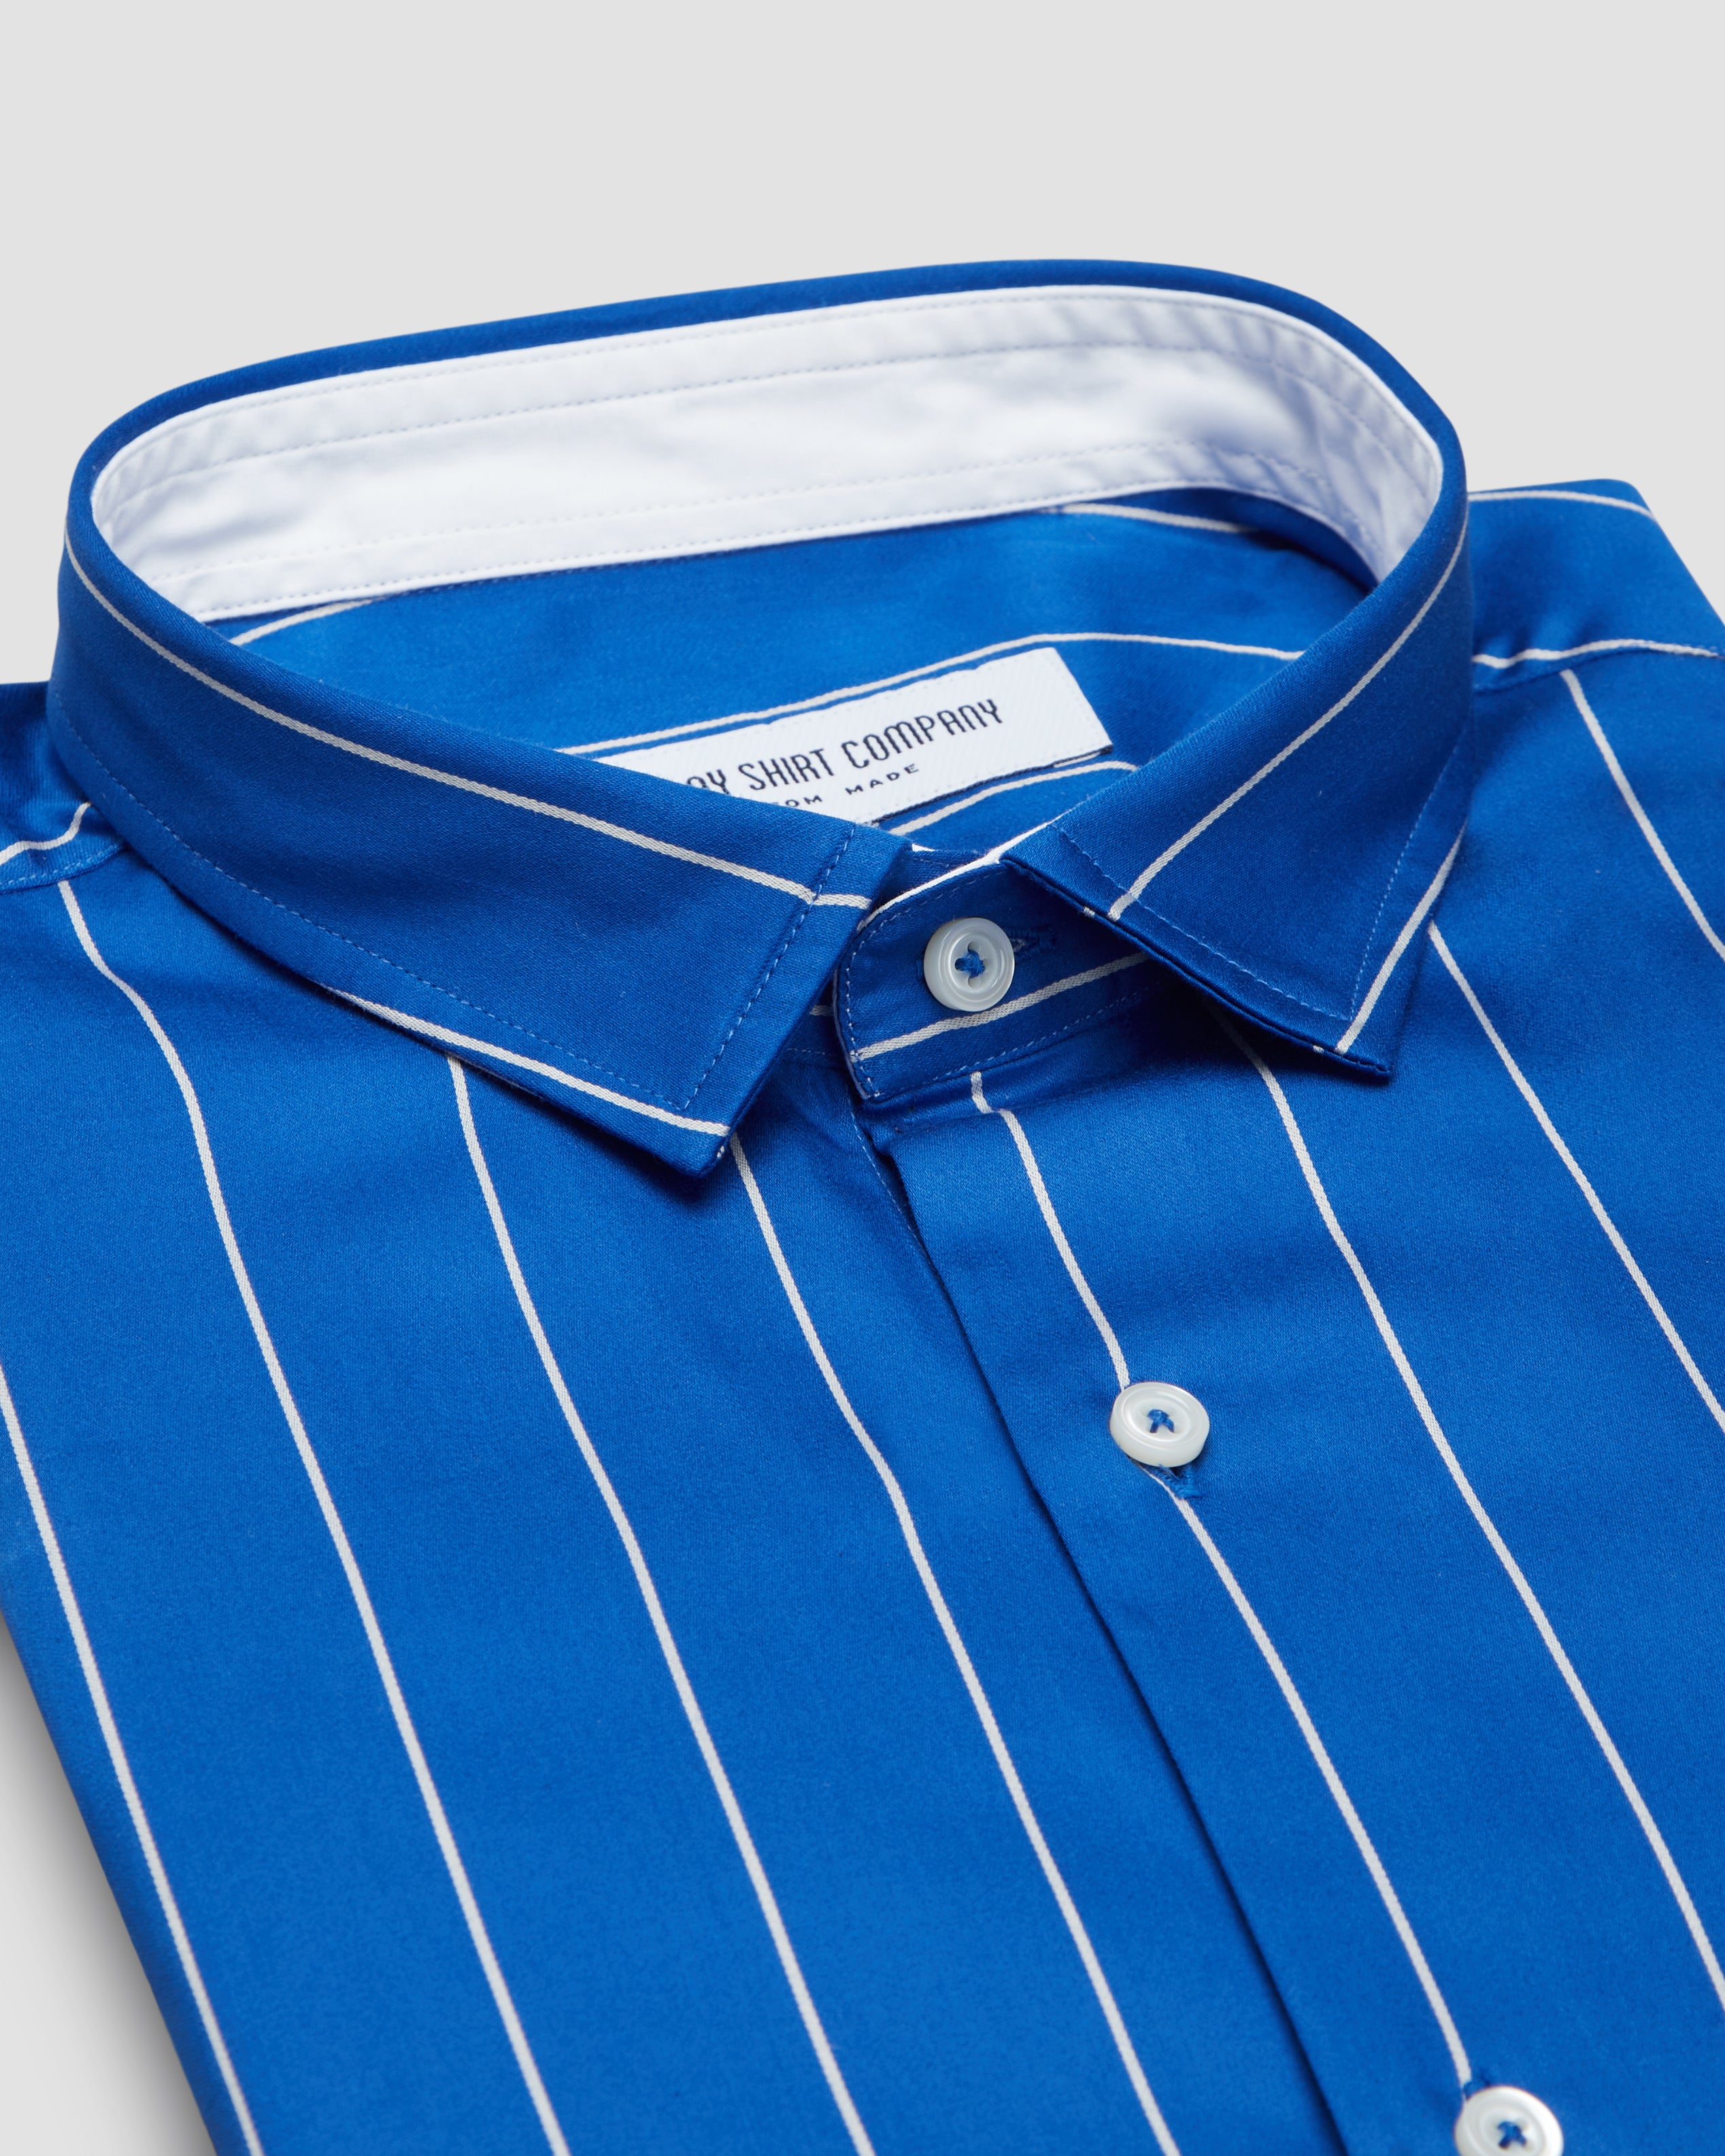 Bombay Shirt Company - Santorini Striped Shirt